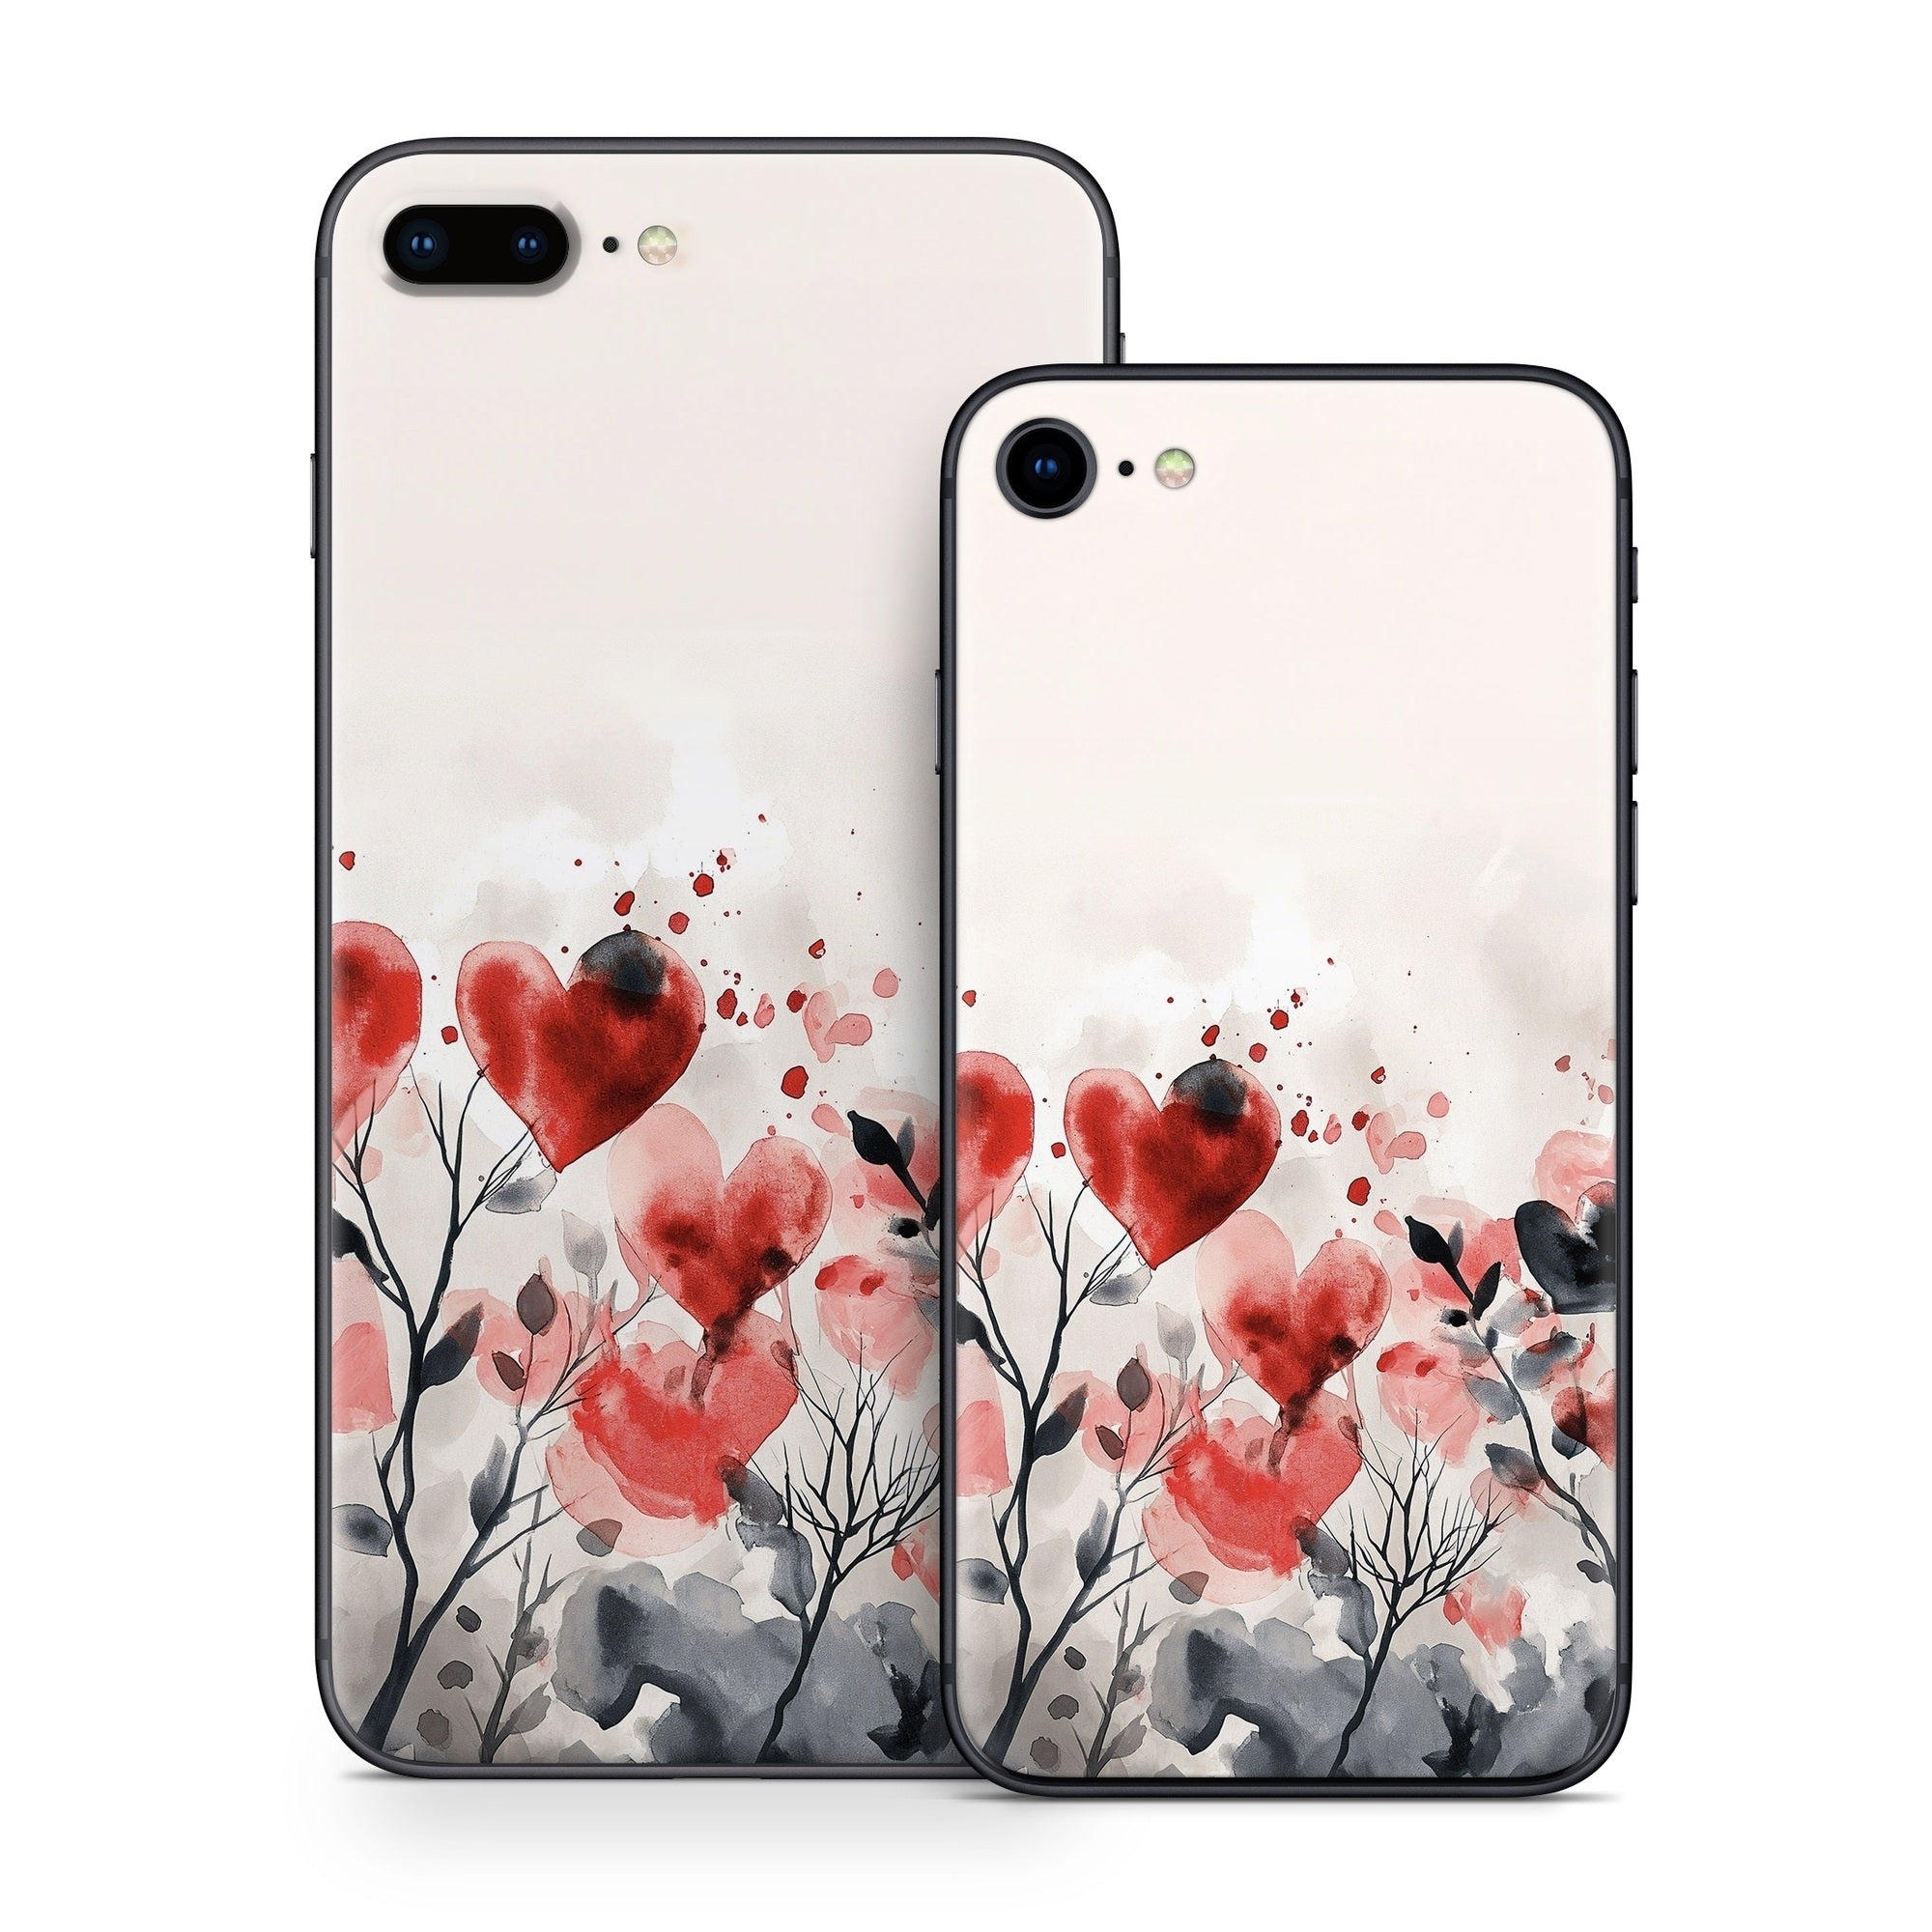 Heart Garden - Apple iPhone 8 Skin